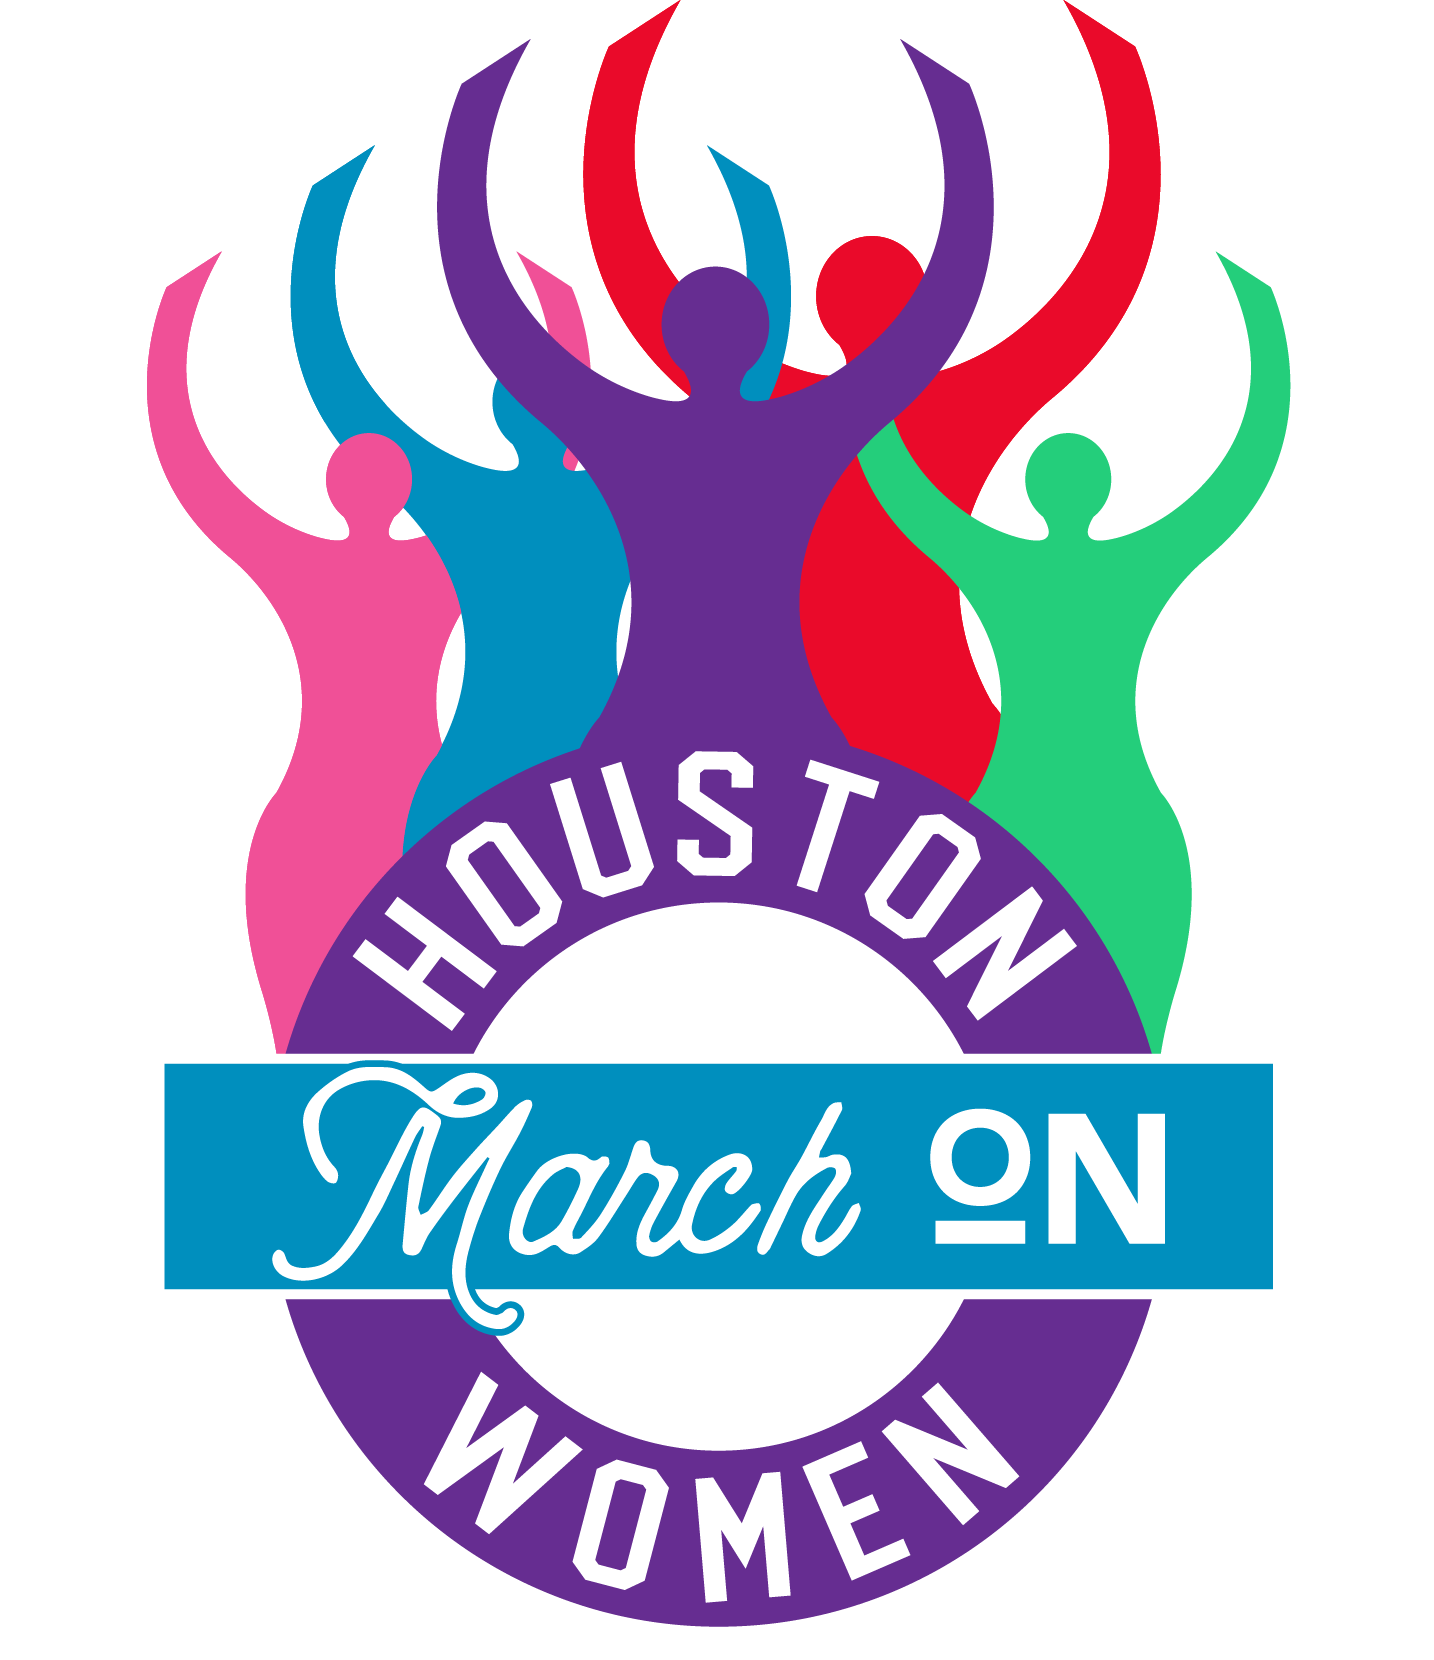 Houston Women March On